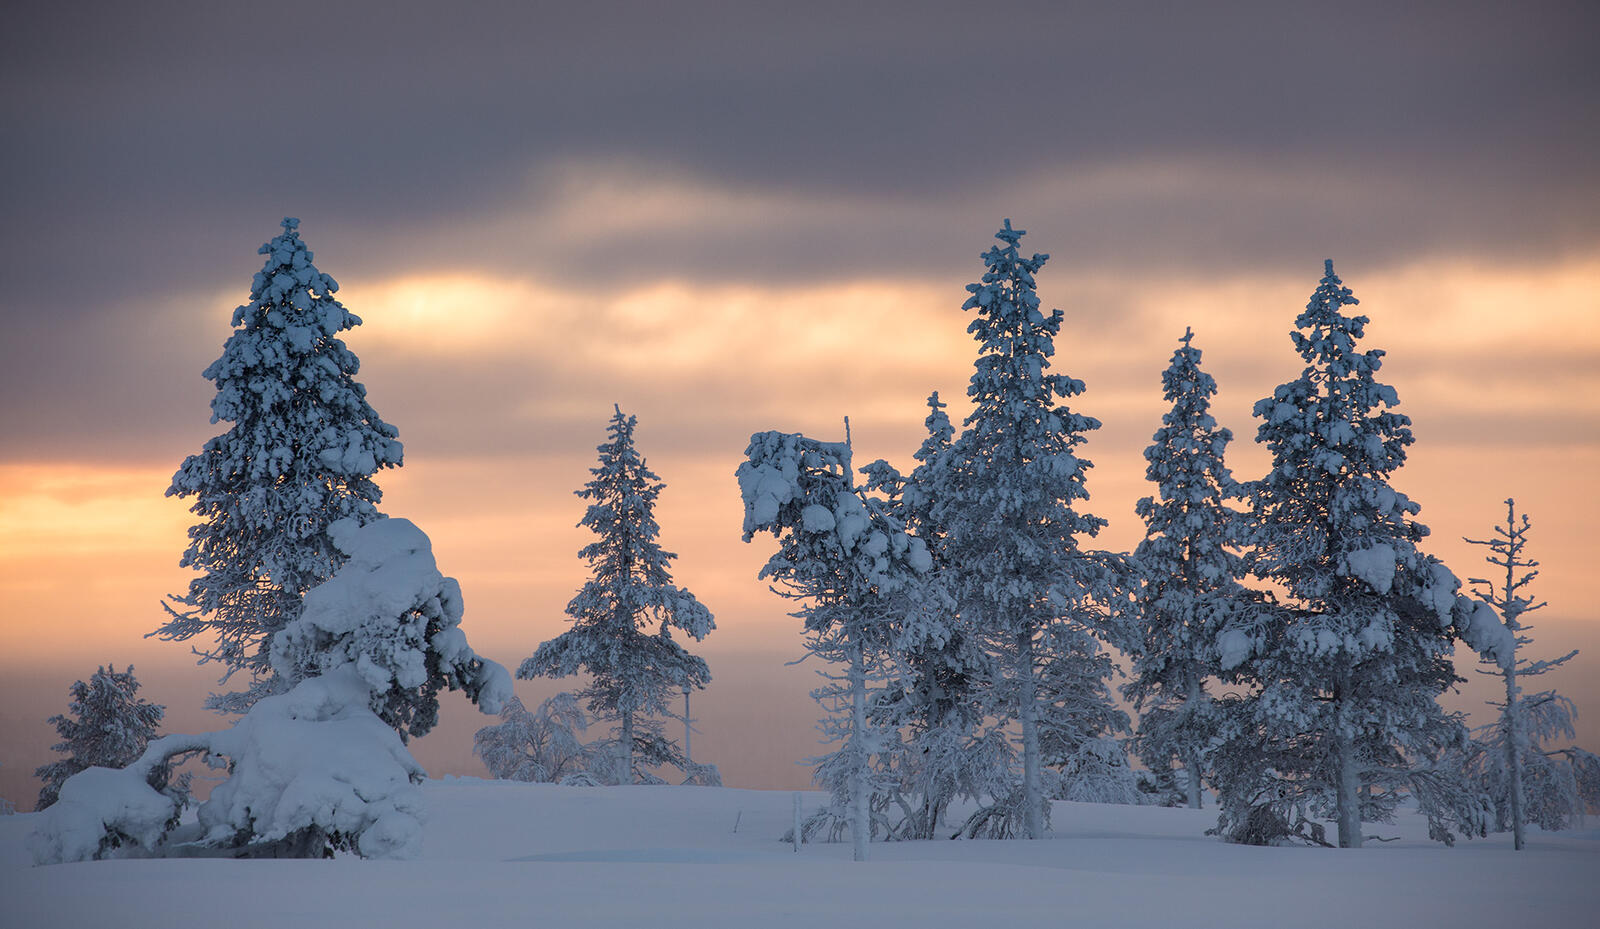 Обои Финляндия закат зима на рабочий стол